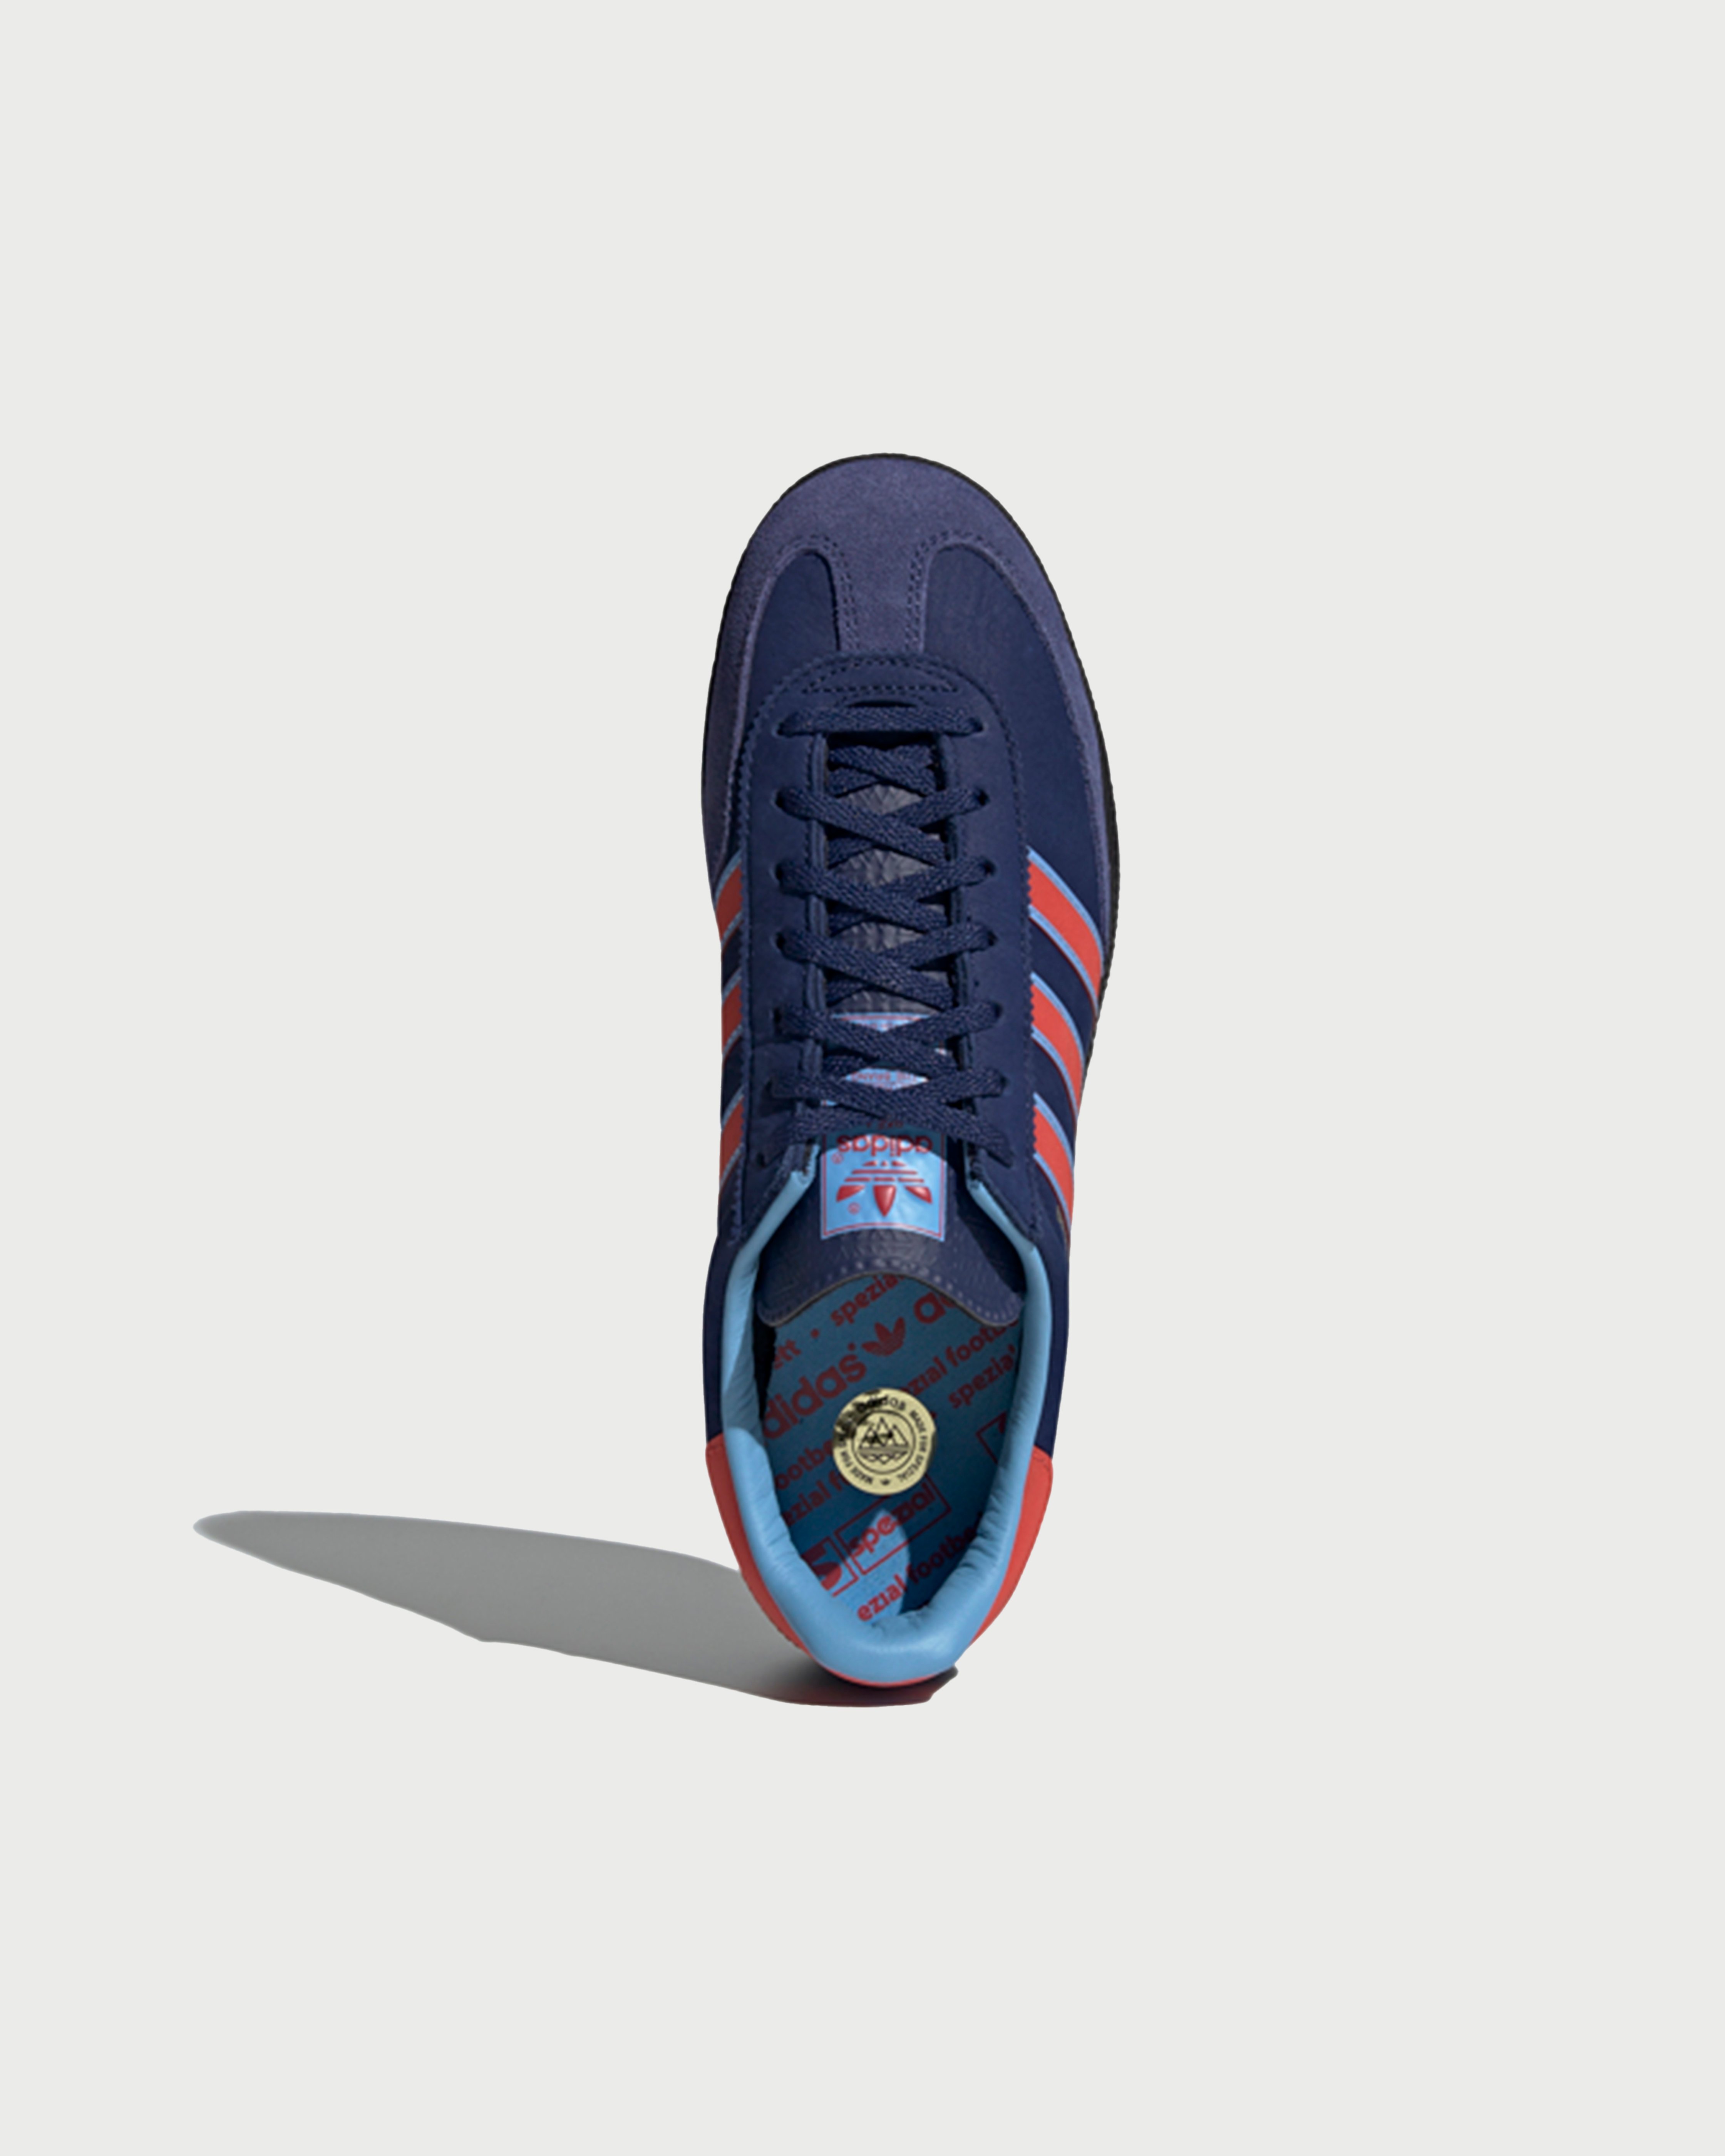 Adidas - Spezial Manchester 89 Trainer Navy - Footwear - Blue - Image 5